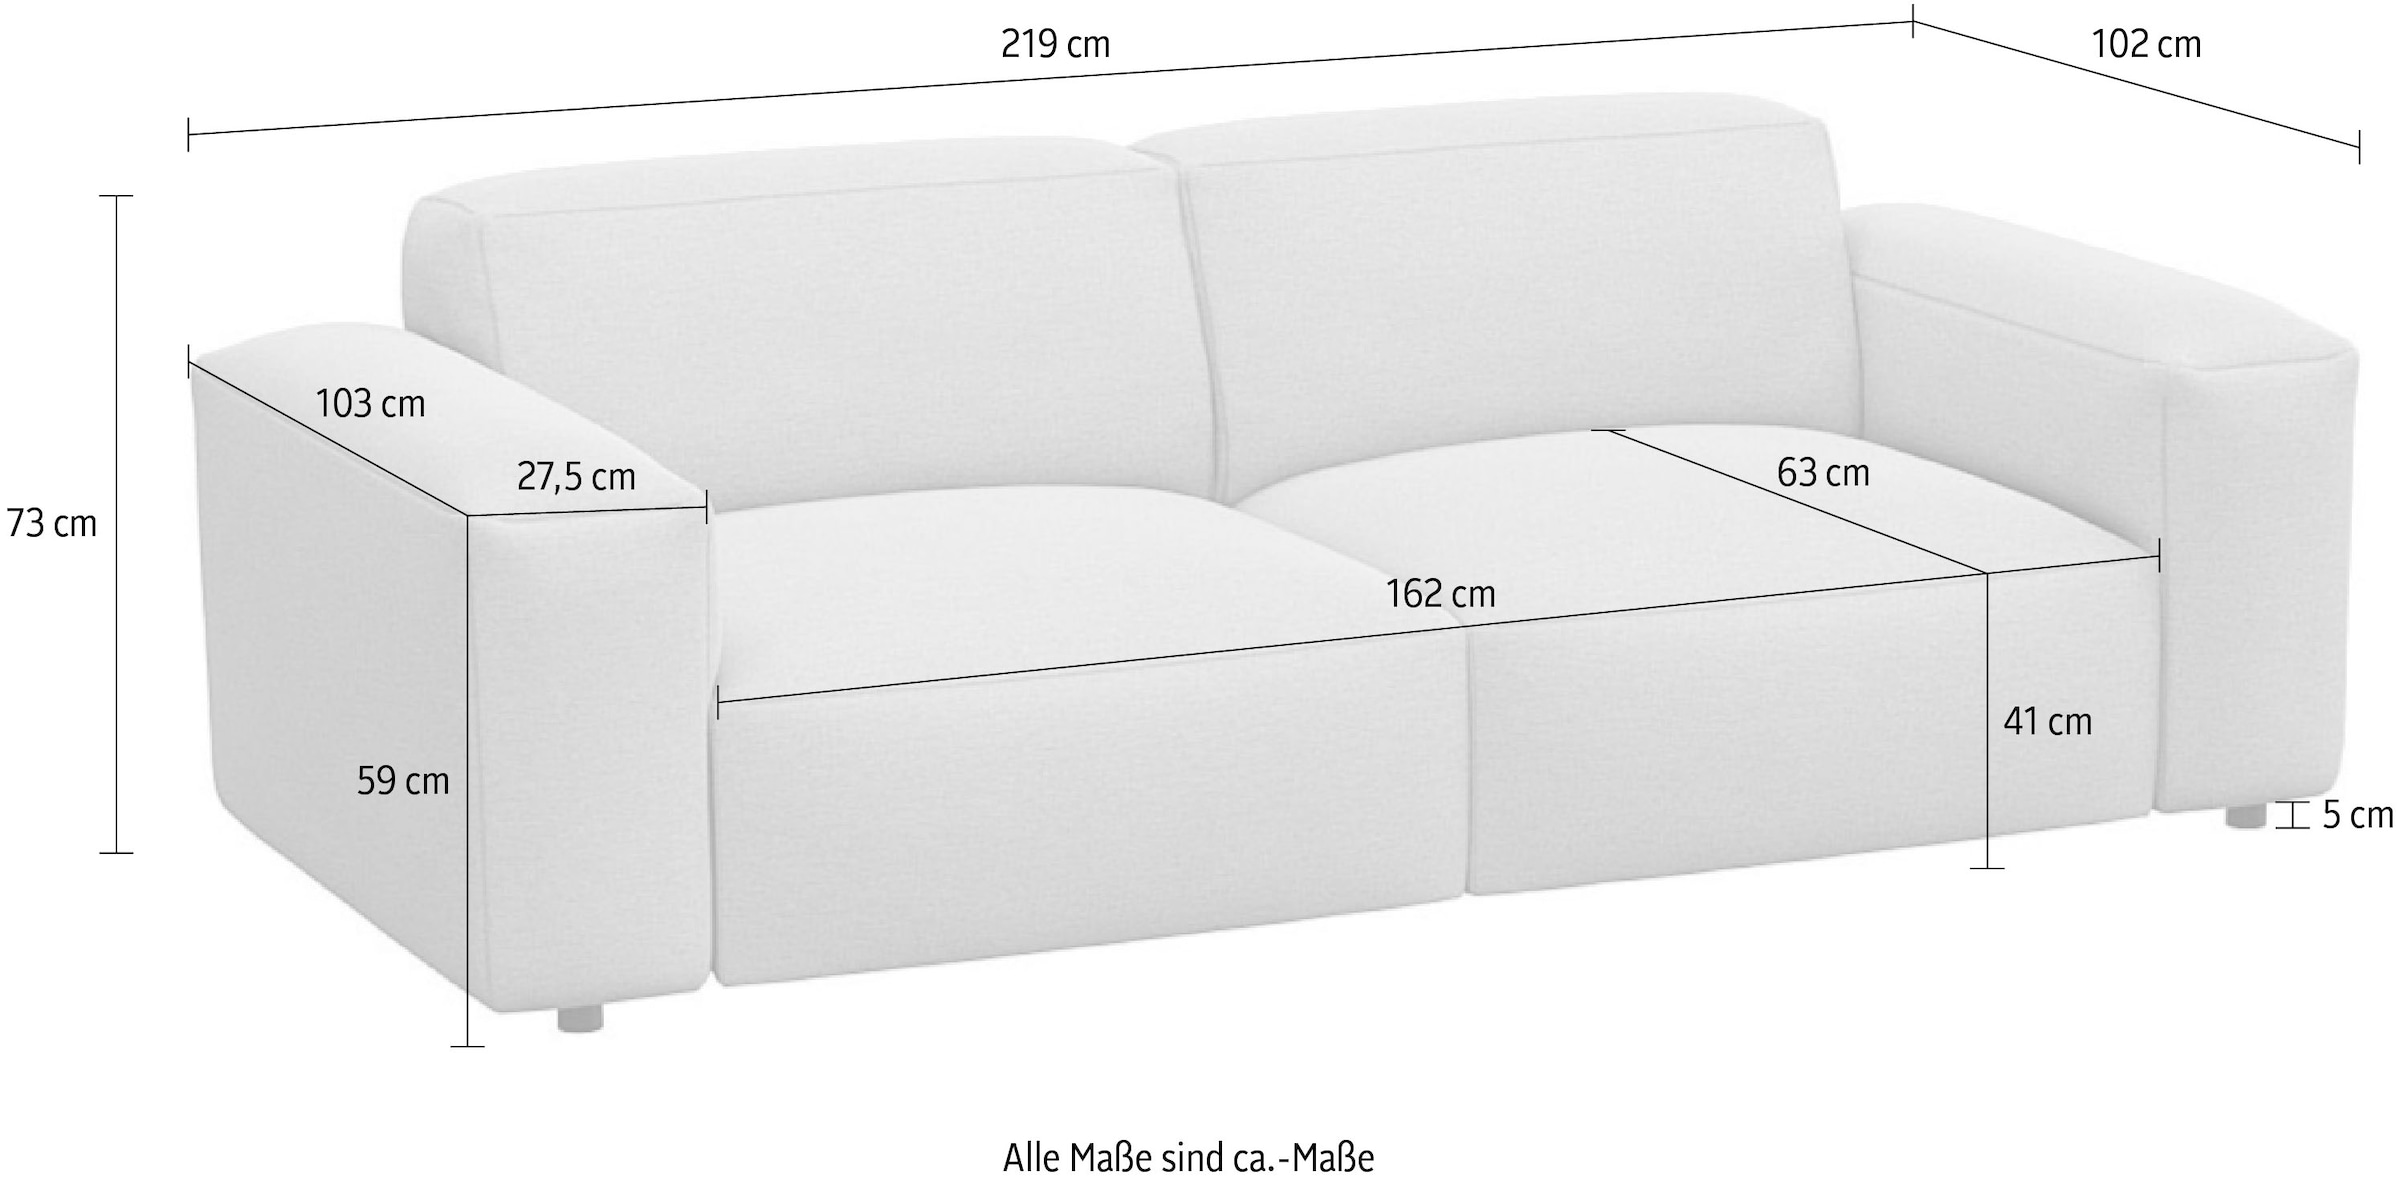 FLEXLUX 2,5-Sitzer »Lucera Sofa«, modern & anschmiegsam, Kaltschaum, Stahl-Wellenunterfederung